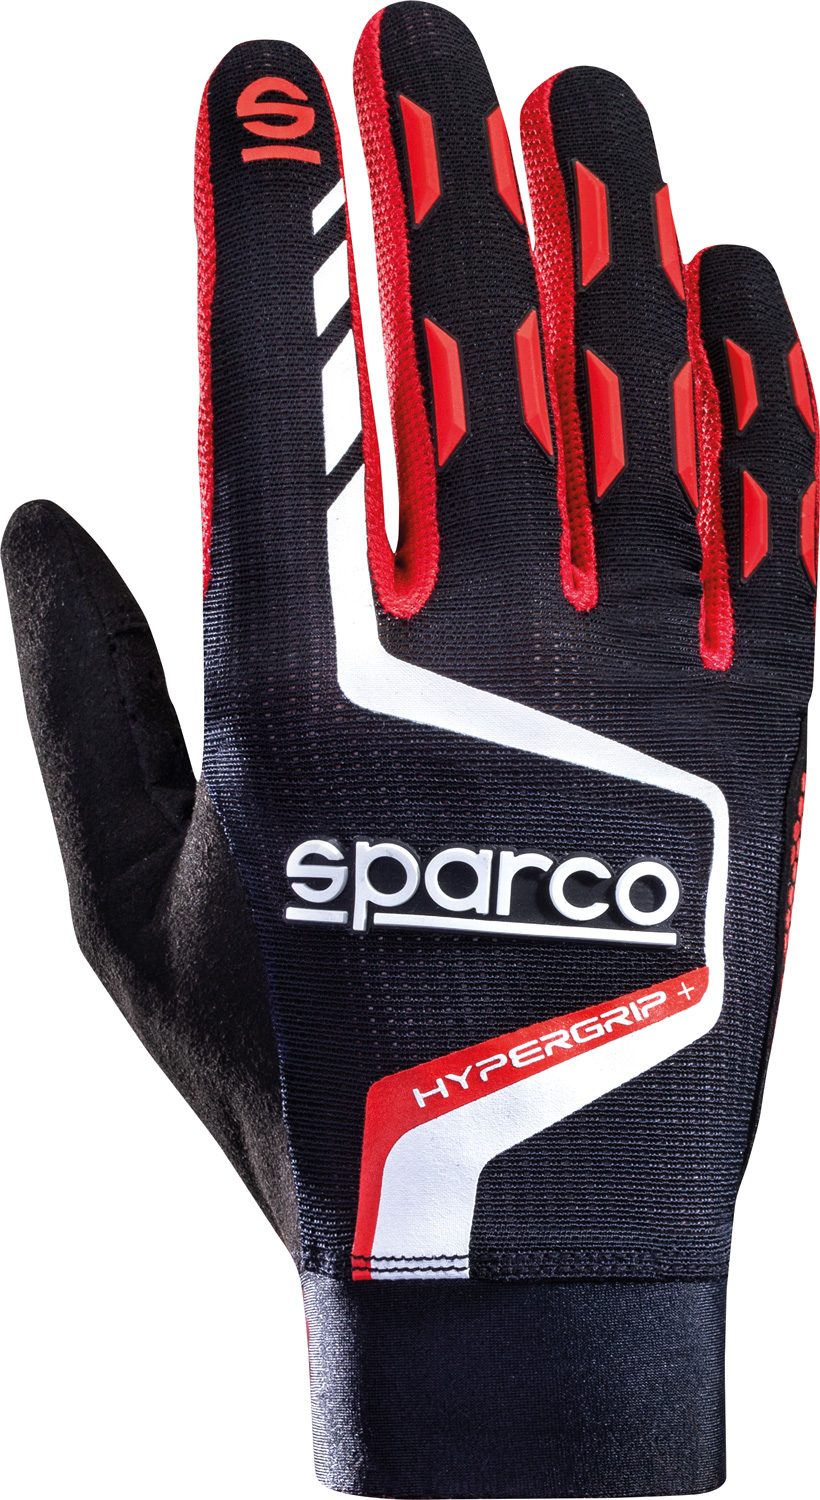 Sparco Gaming Handschuh Hypergrip+, schwarz/rot